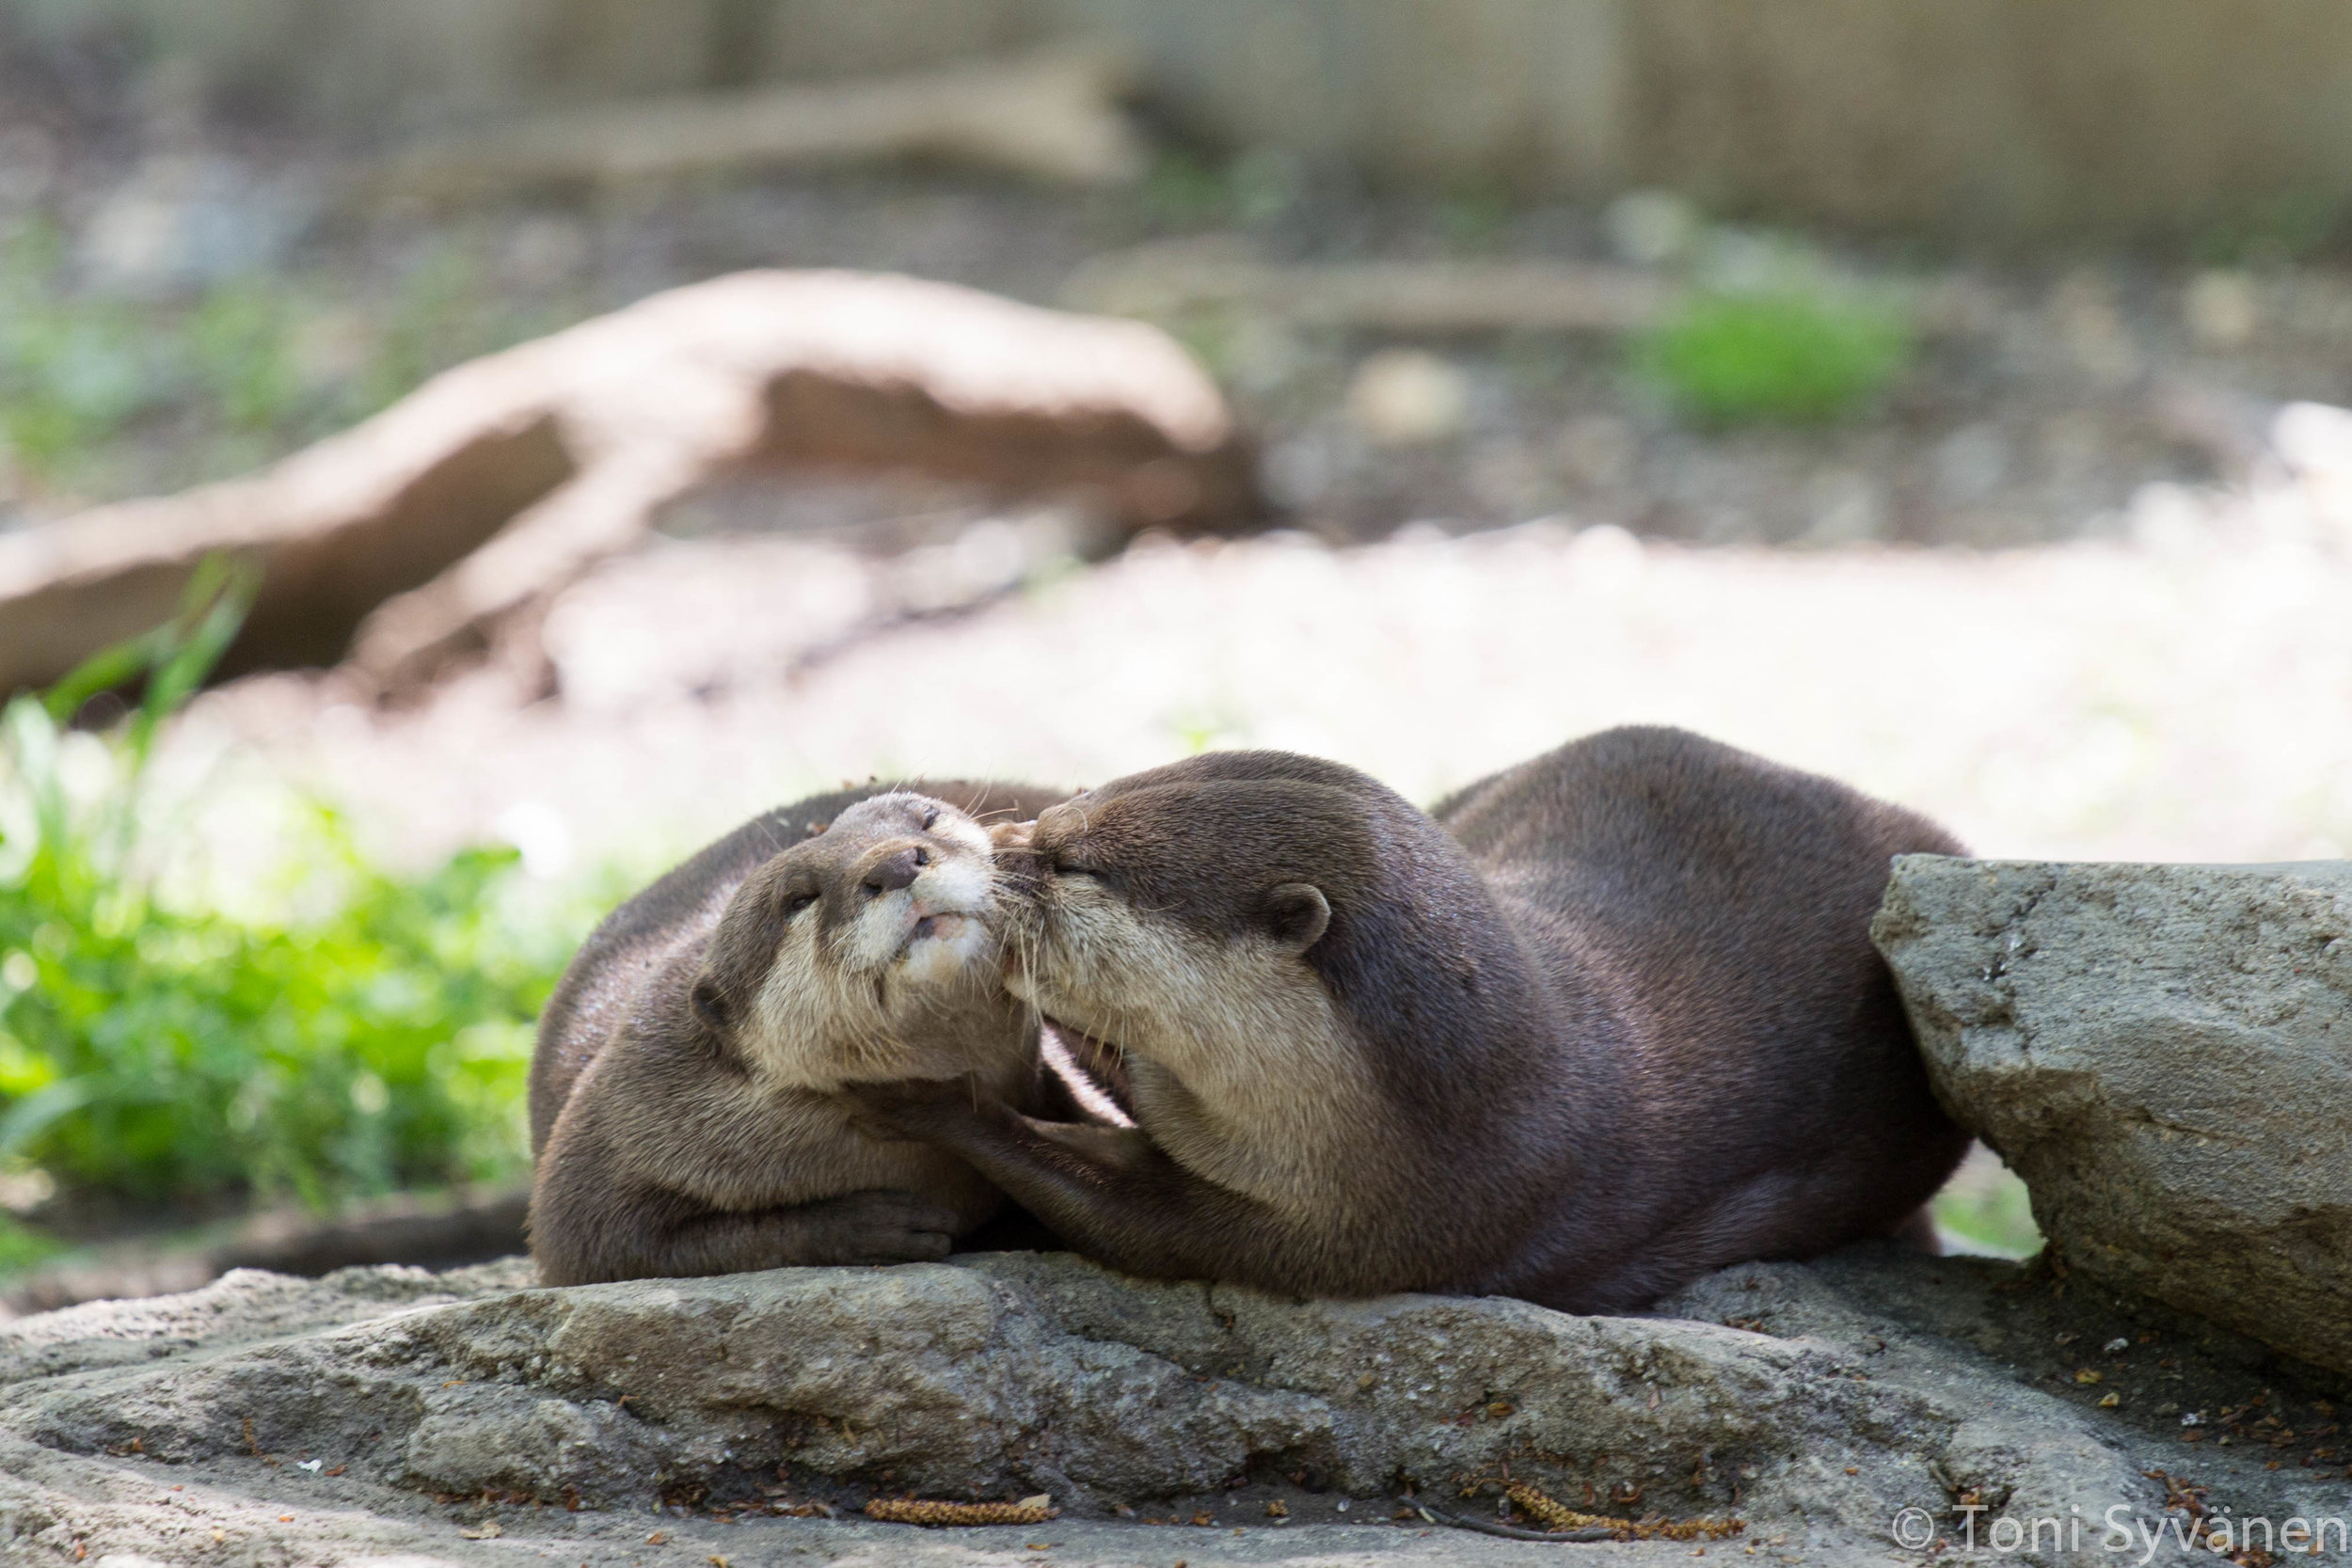 Otter's Friend Needs a Kiss on the Cheek